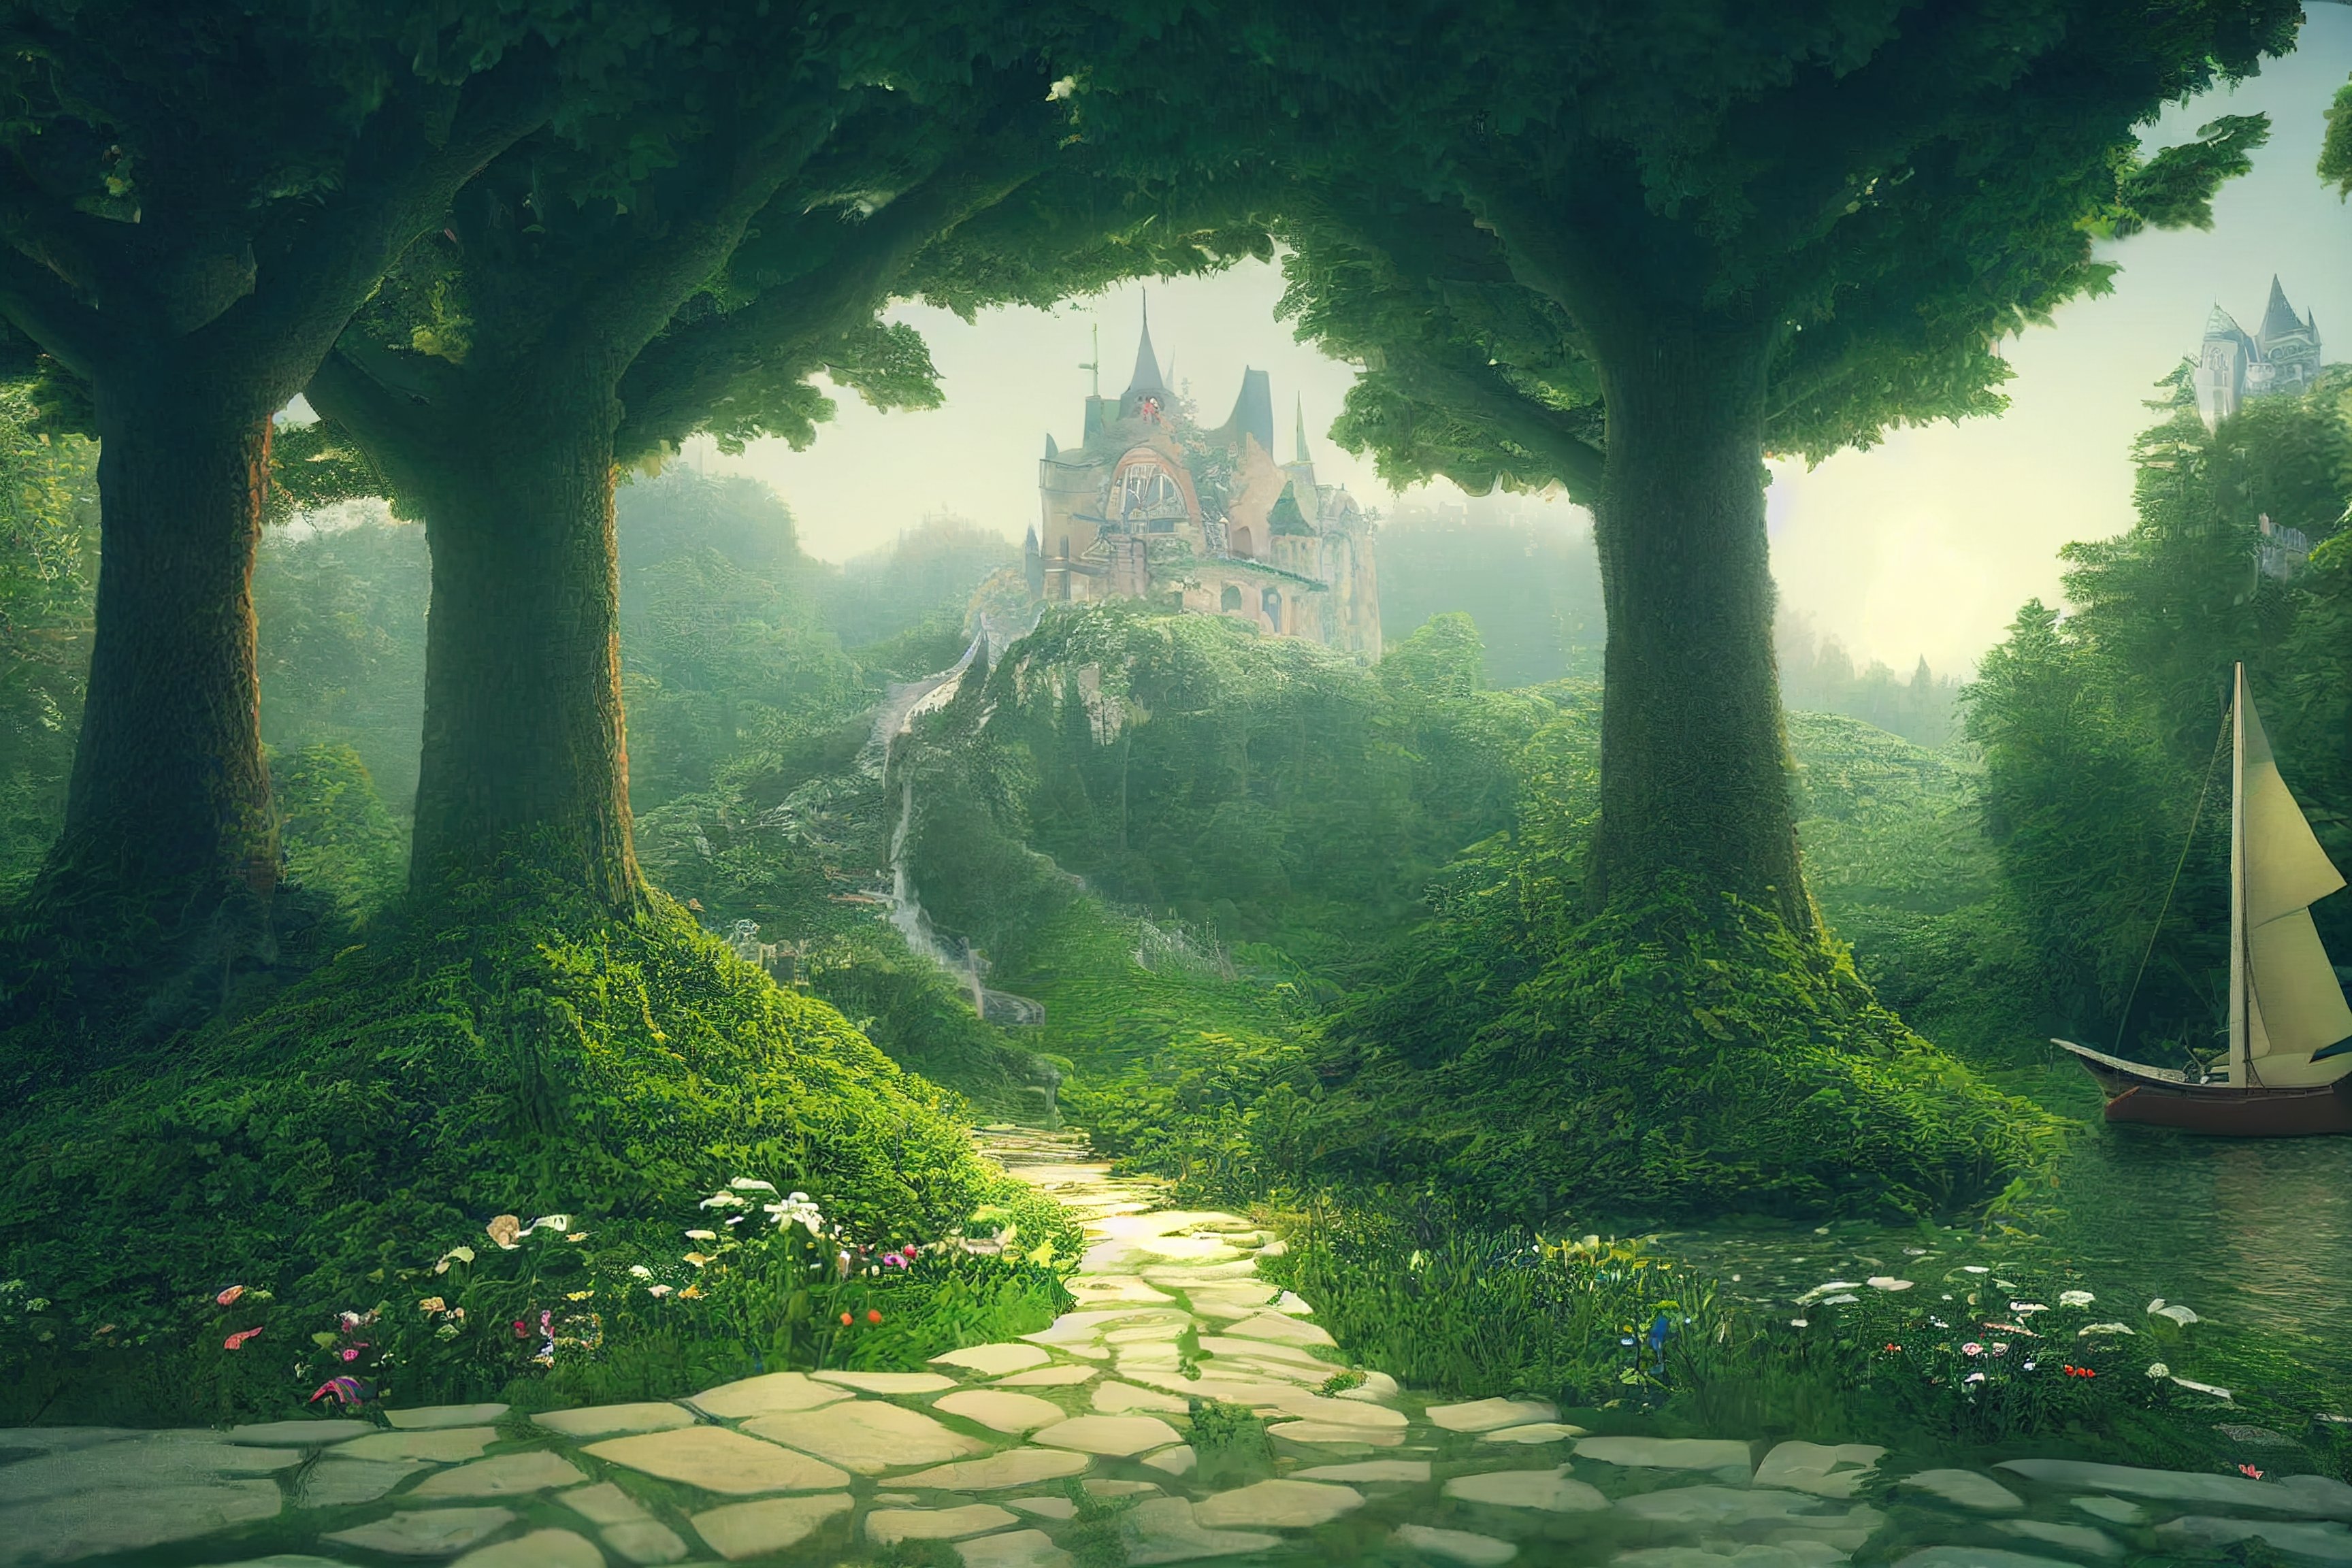 Fairy tale woodland onto a castle and a sailing ship